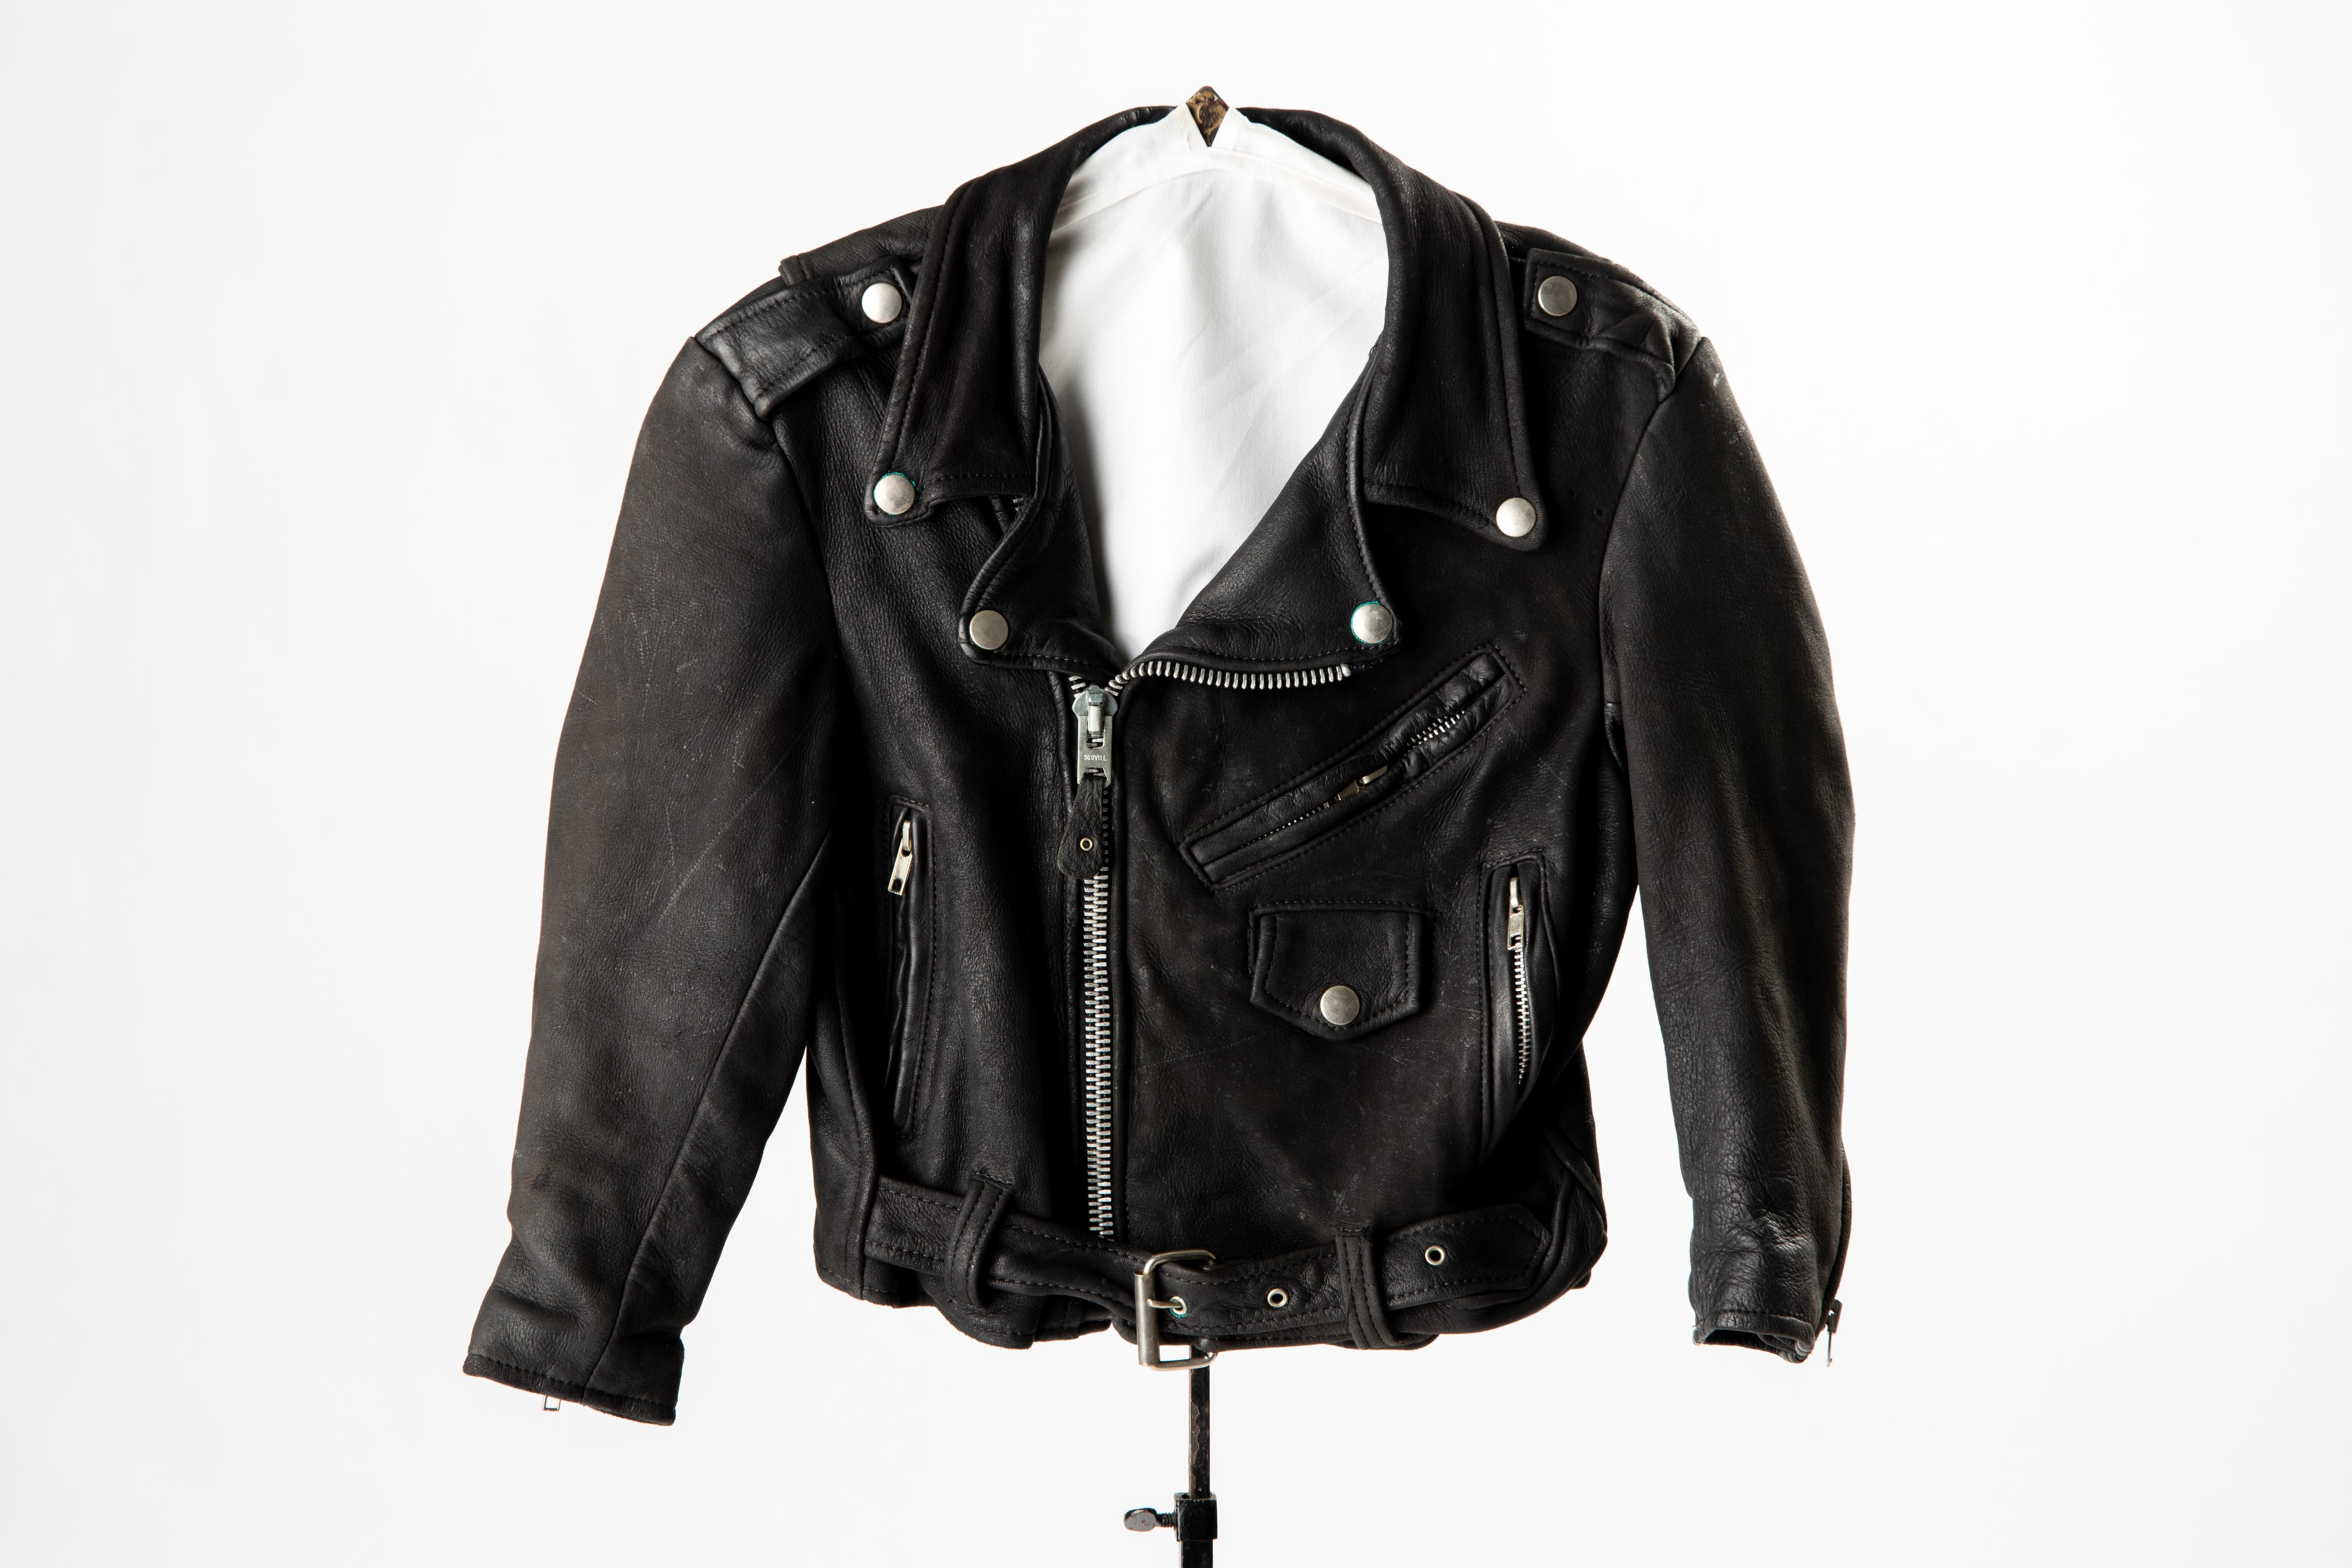 Child's Vintage 1980's Black Leather Motorcycle Jacket Size 8 For Sale ...